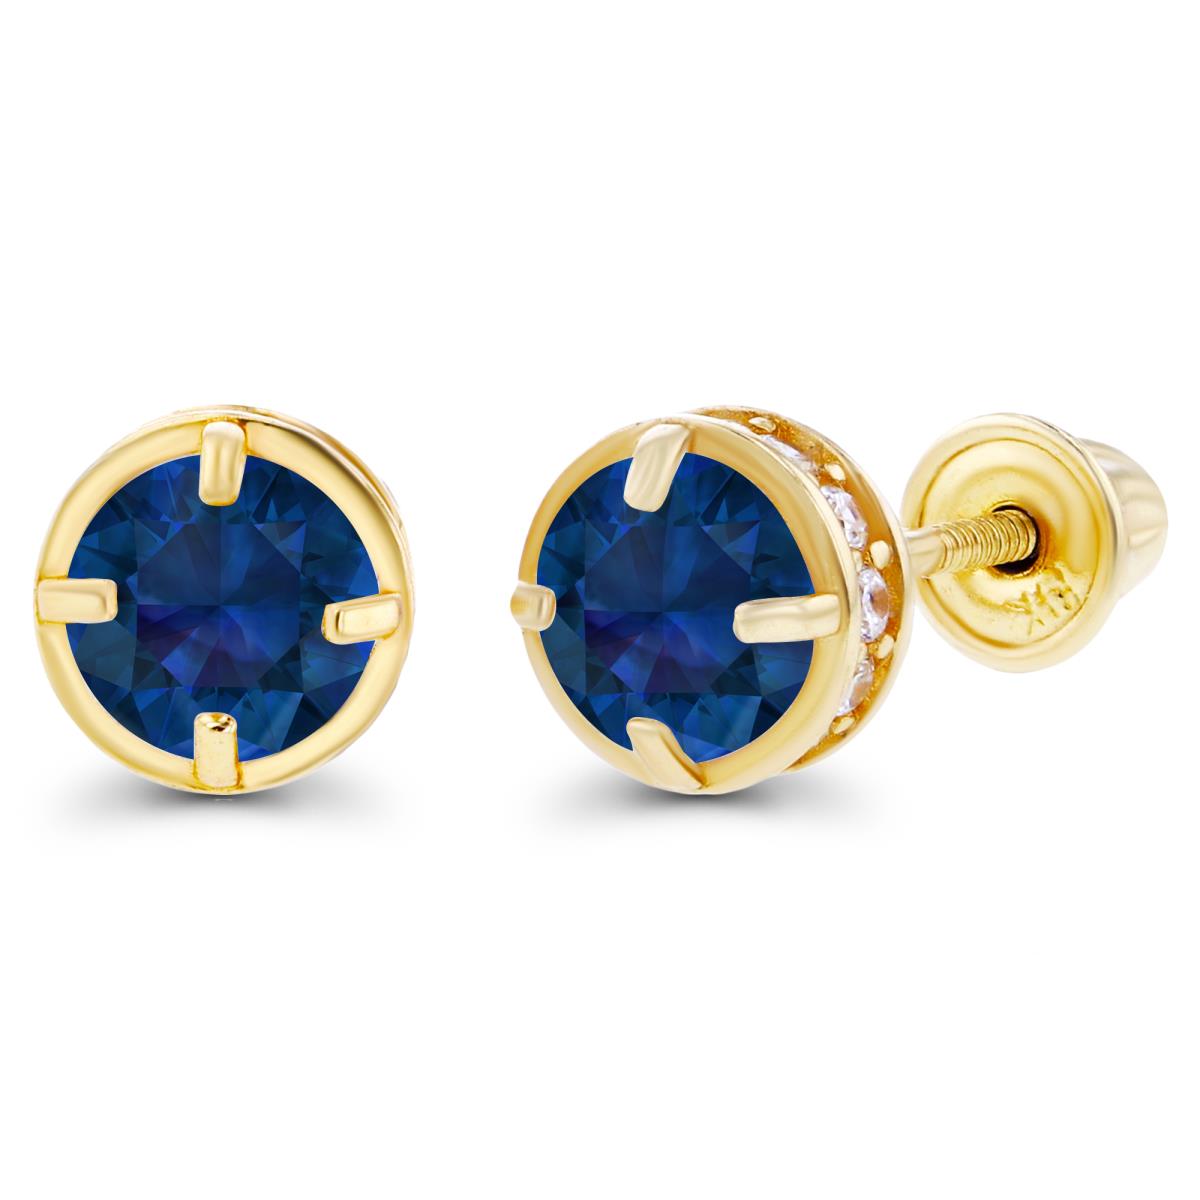 14K Yellow Gold 4mm Created Blue Sapphire & 1mm Created White Sapphire Basket Screwback Earrings